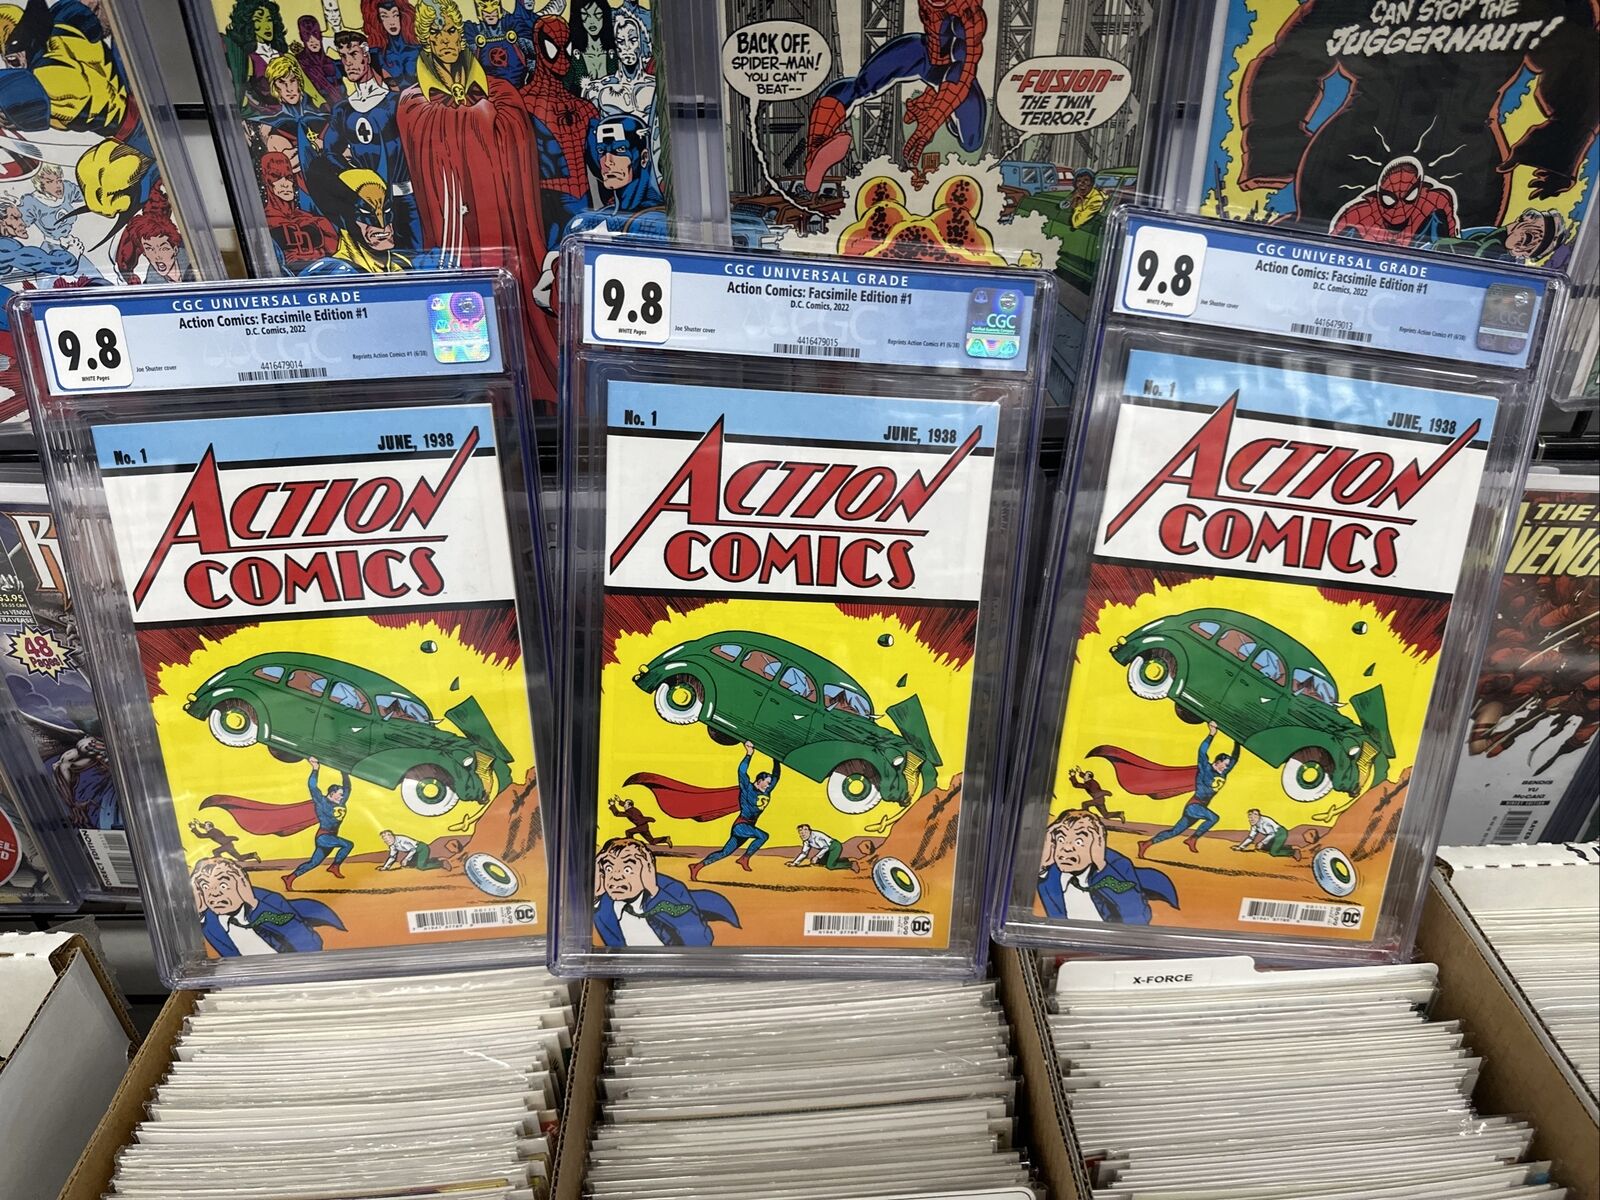 Action Comics: Facsimile Edition 1 CGC 9.8 Reprints Action Comics #1